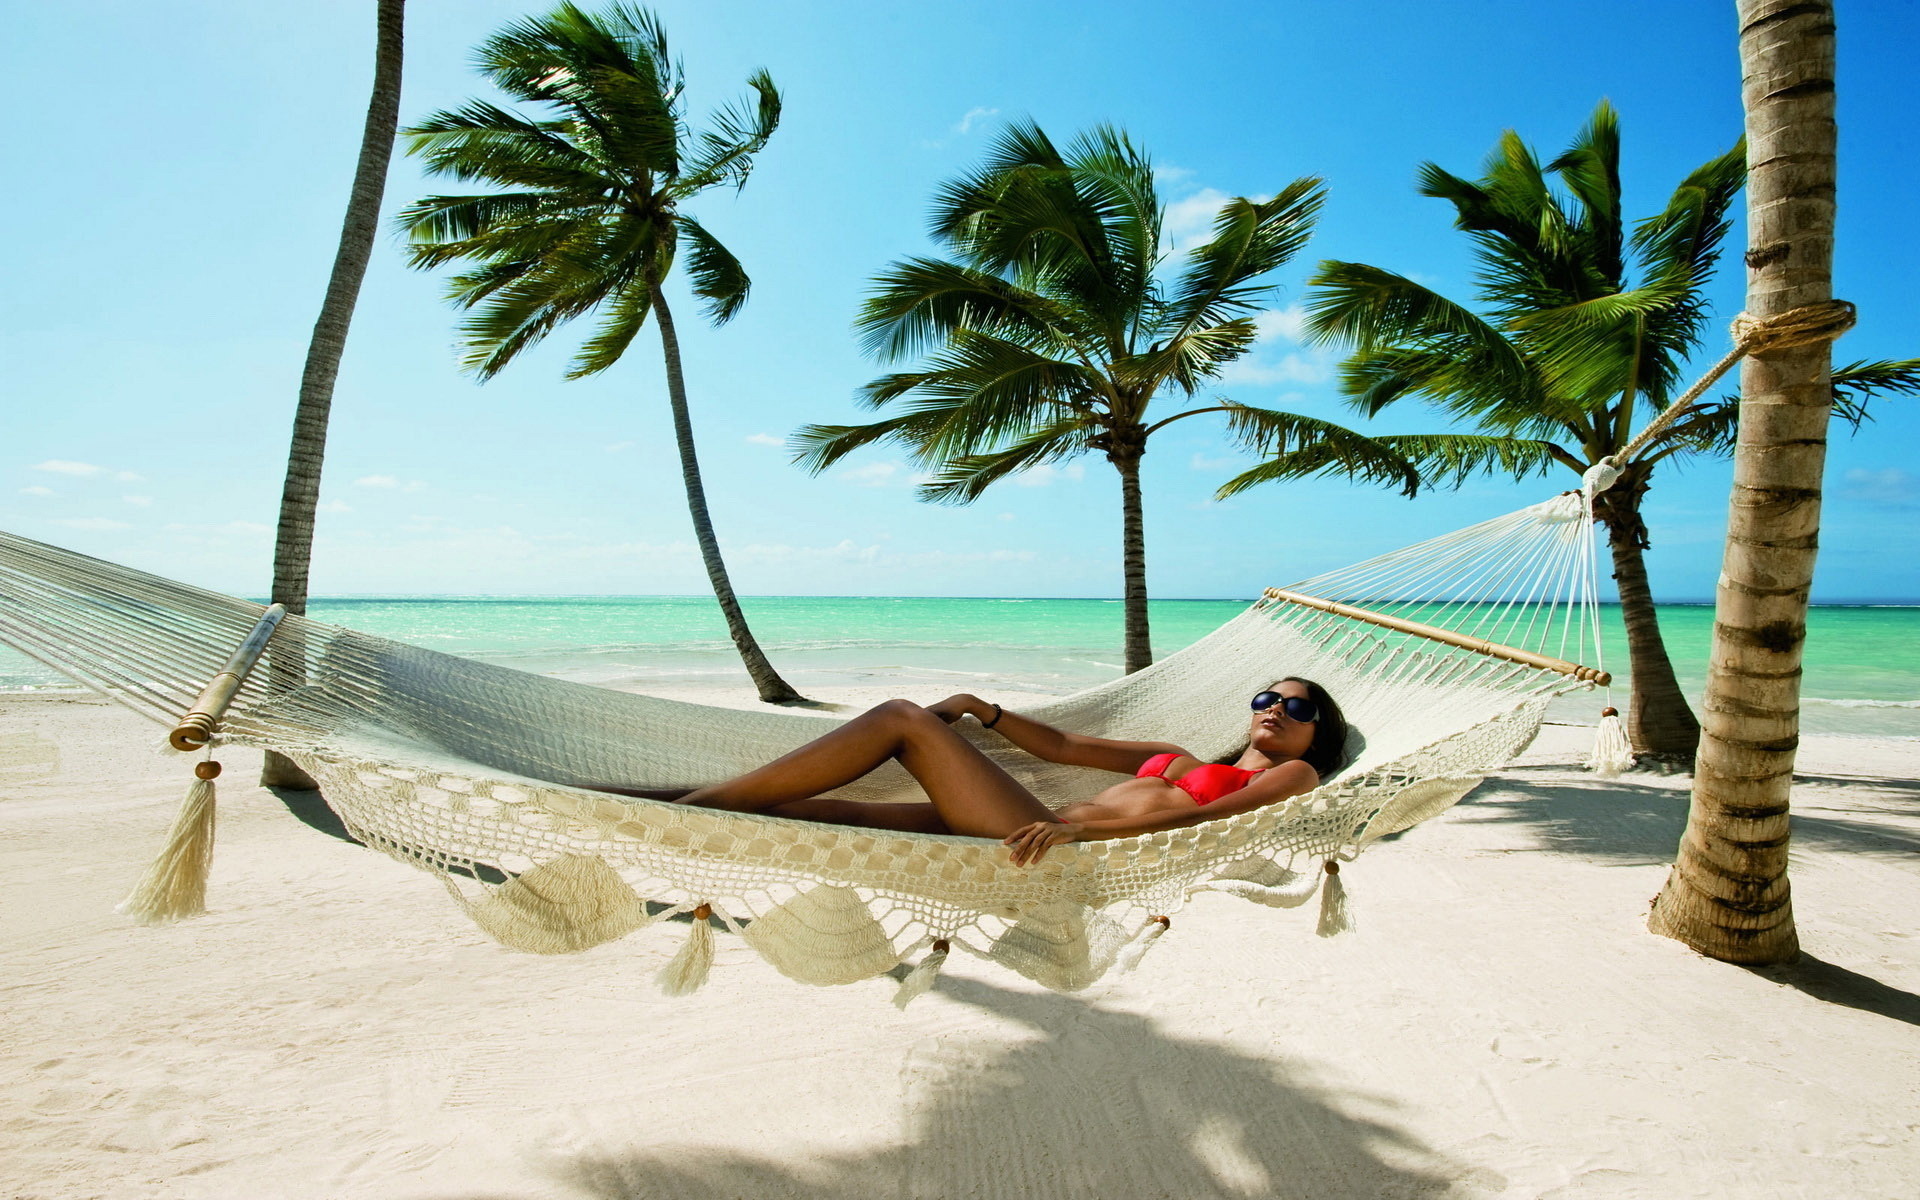 Tropical paradise featuring women in bikinis.